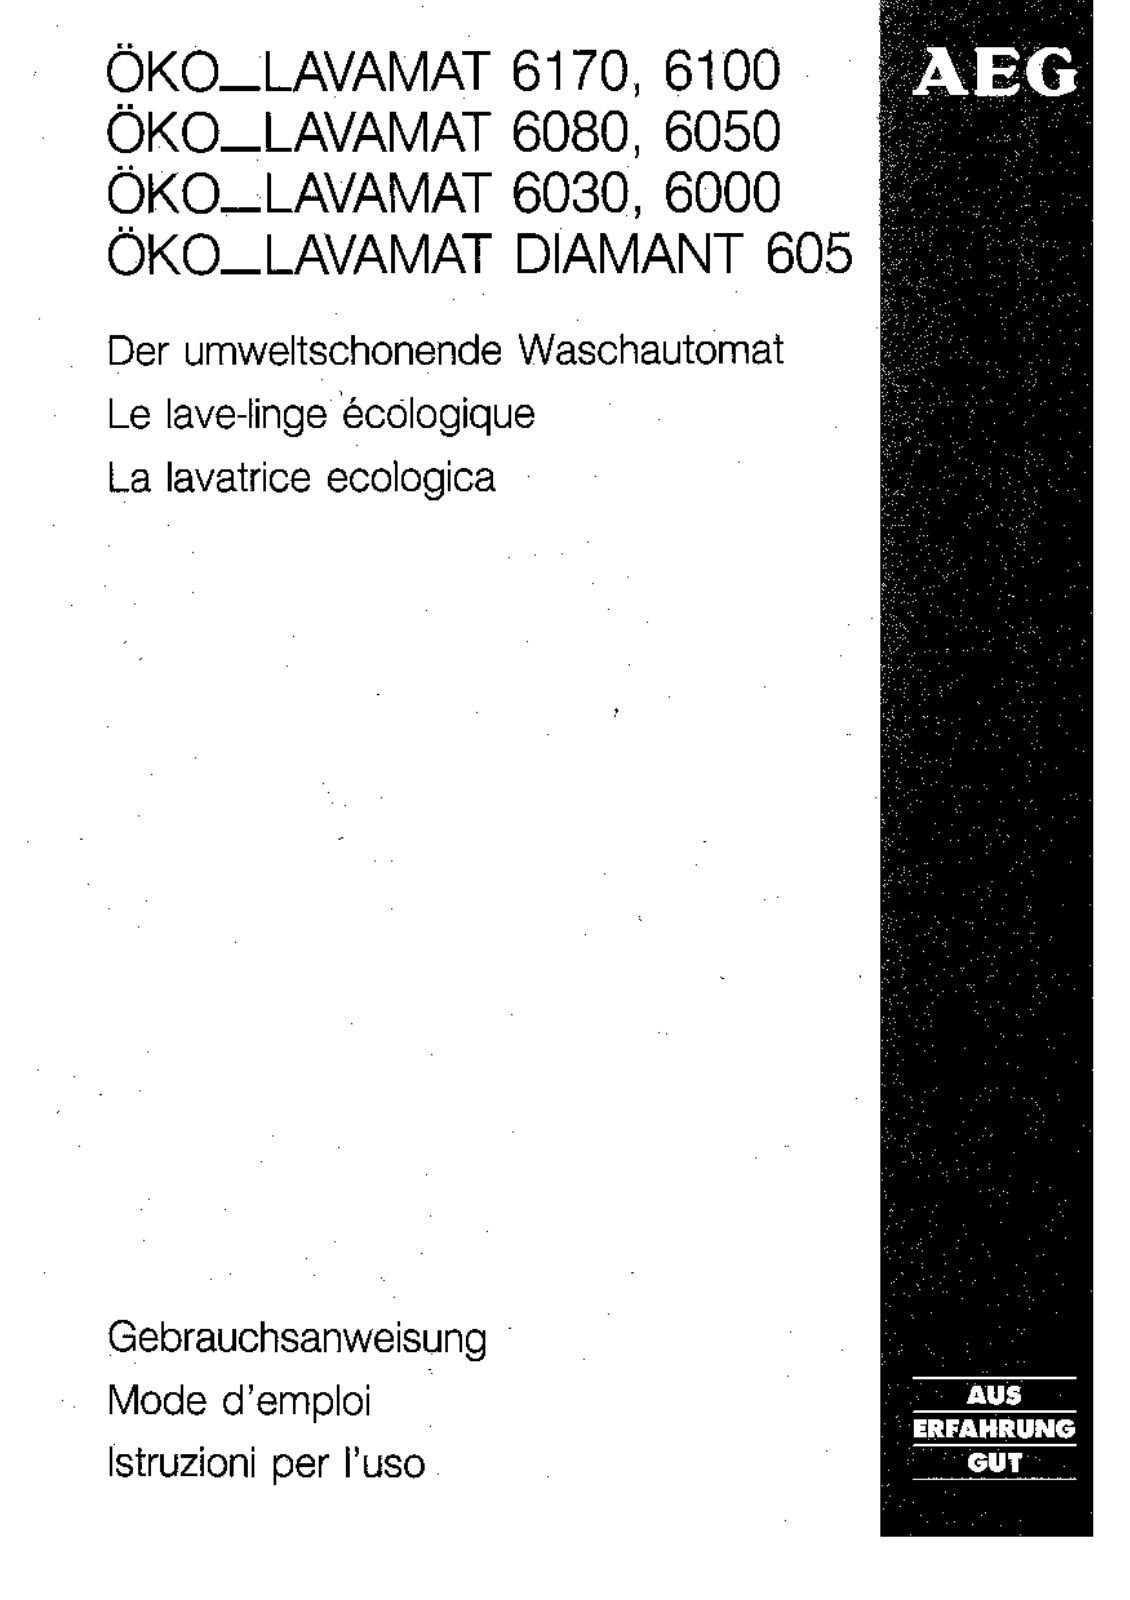 AEG LAV6030, LAVDIAMANT605 Manual